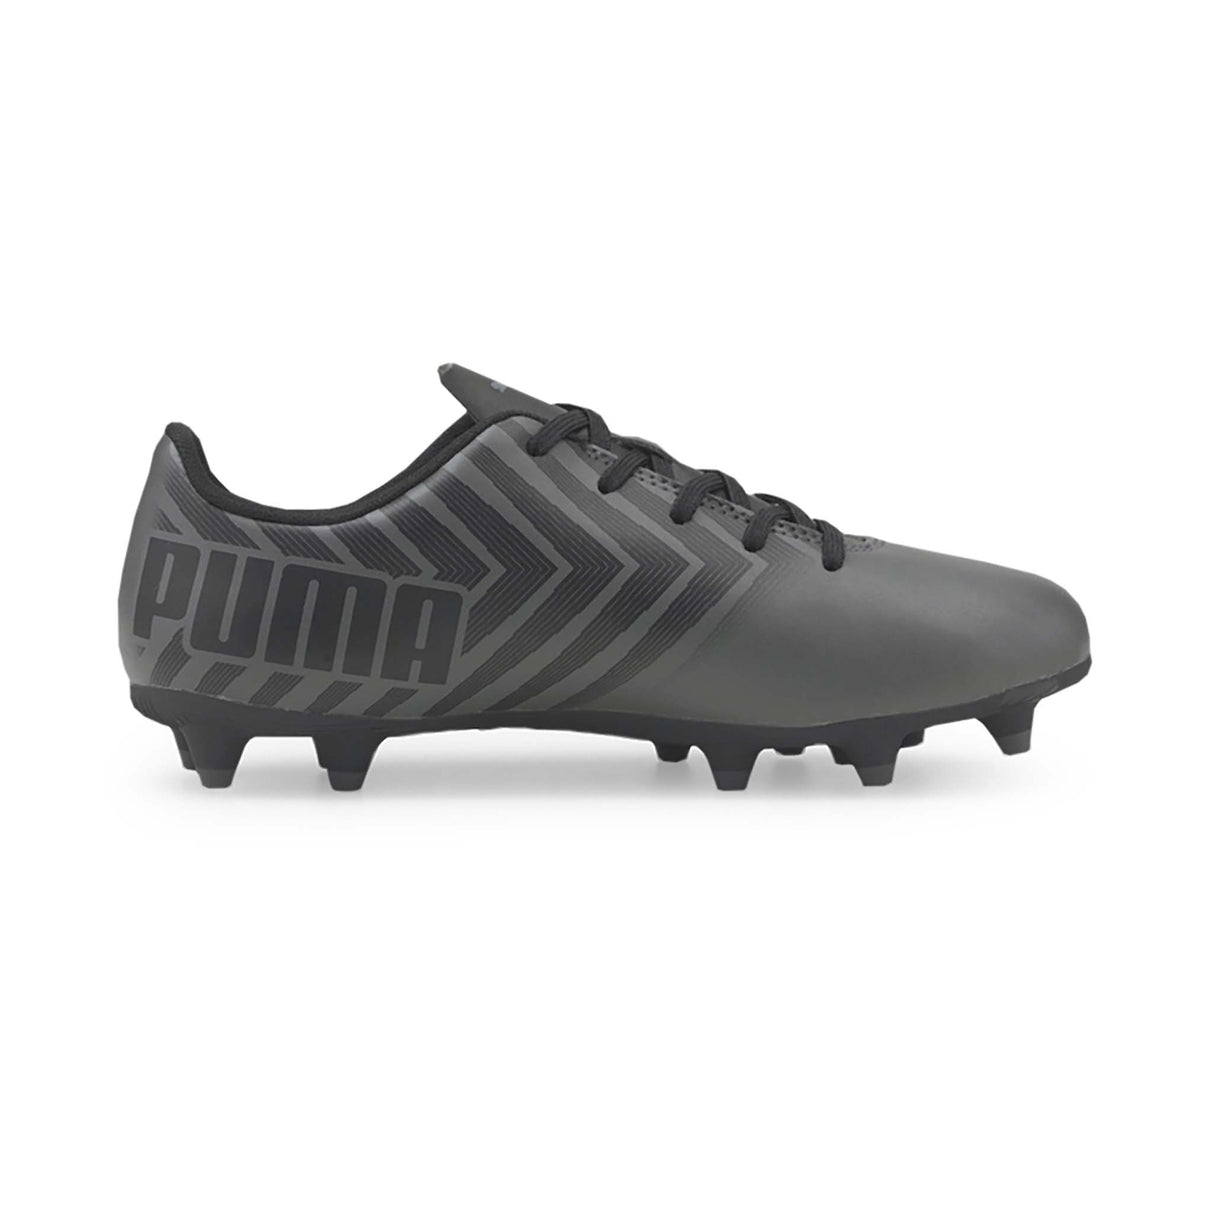 Puma Tacto II FG/AG Junior souliers soccer crampons gris noir enfant lateral